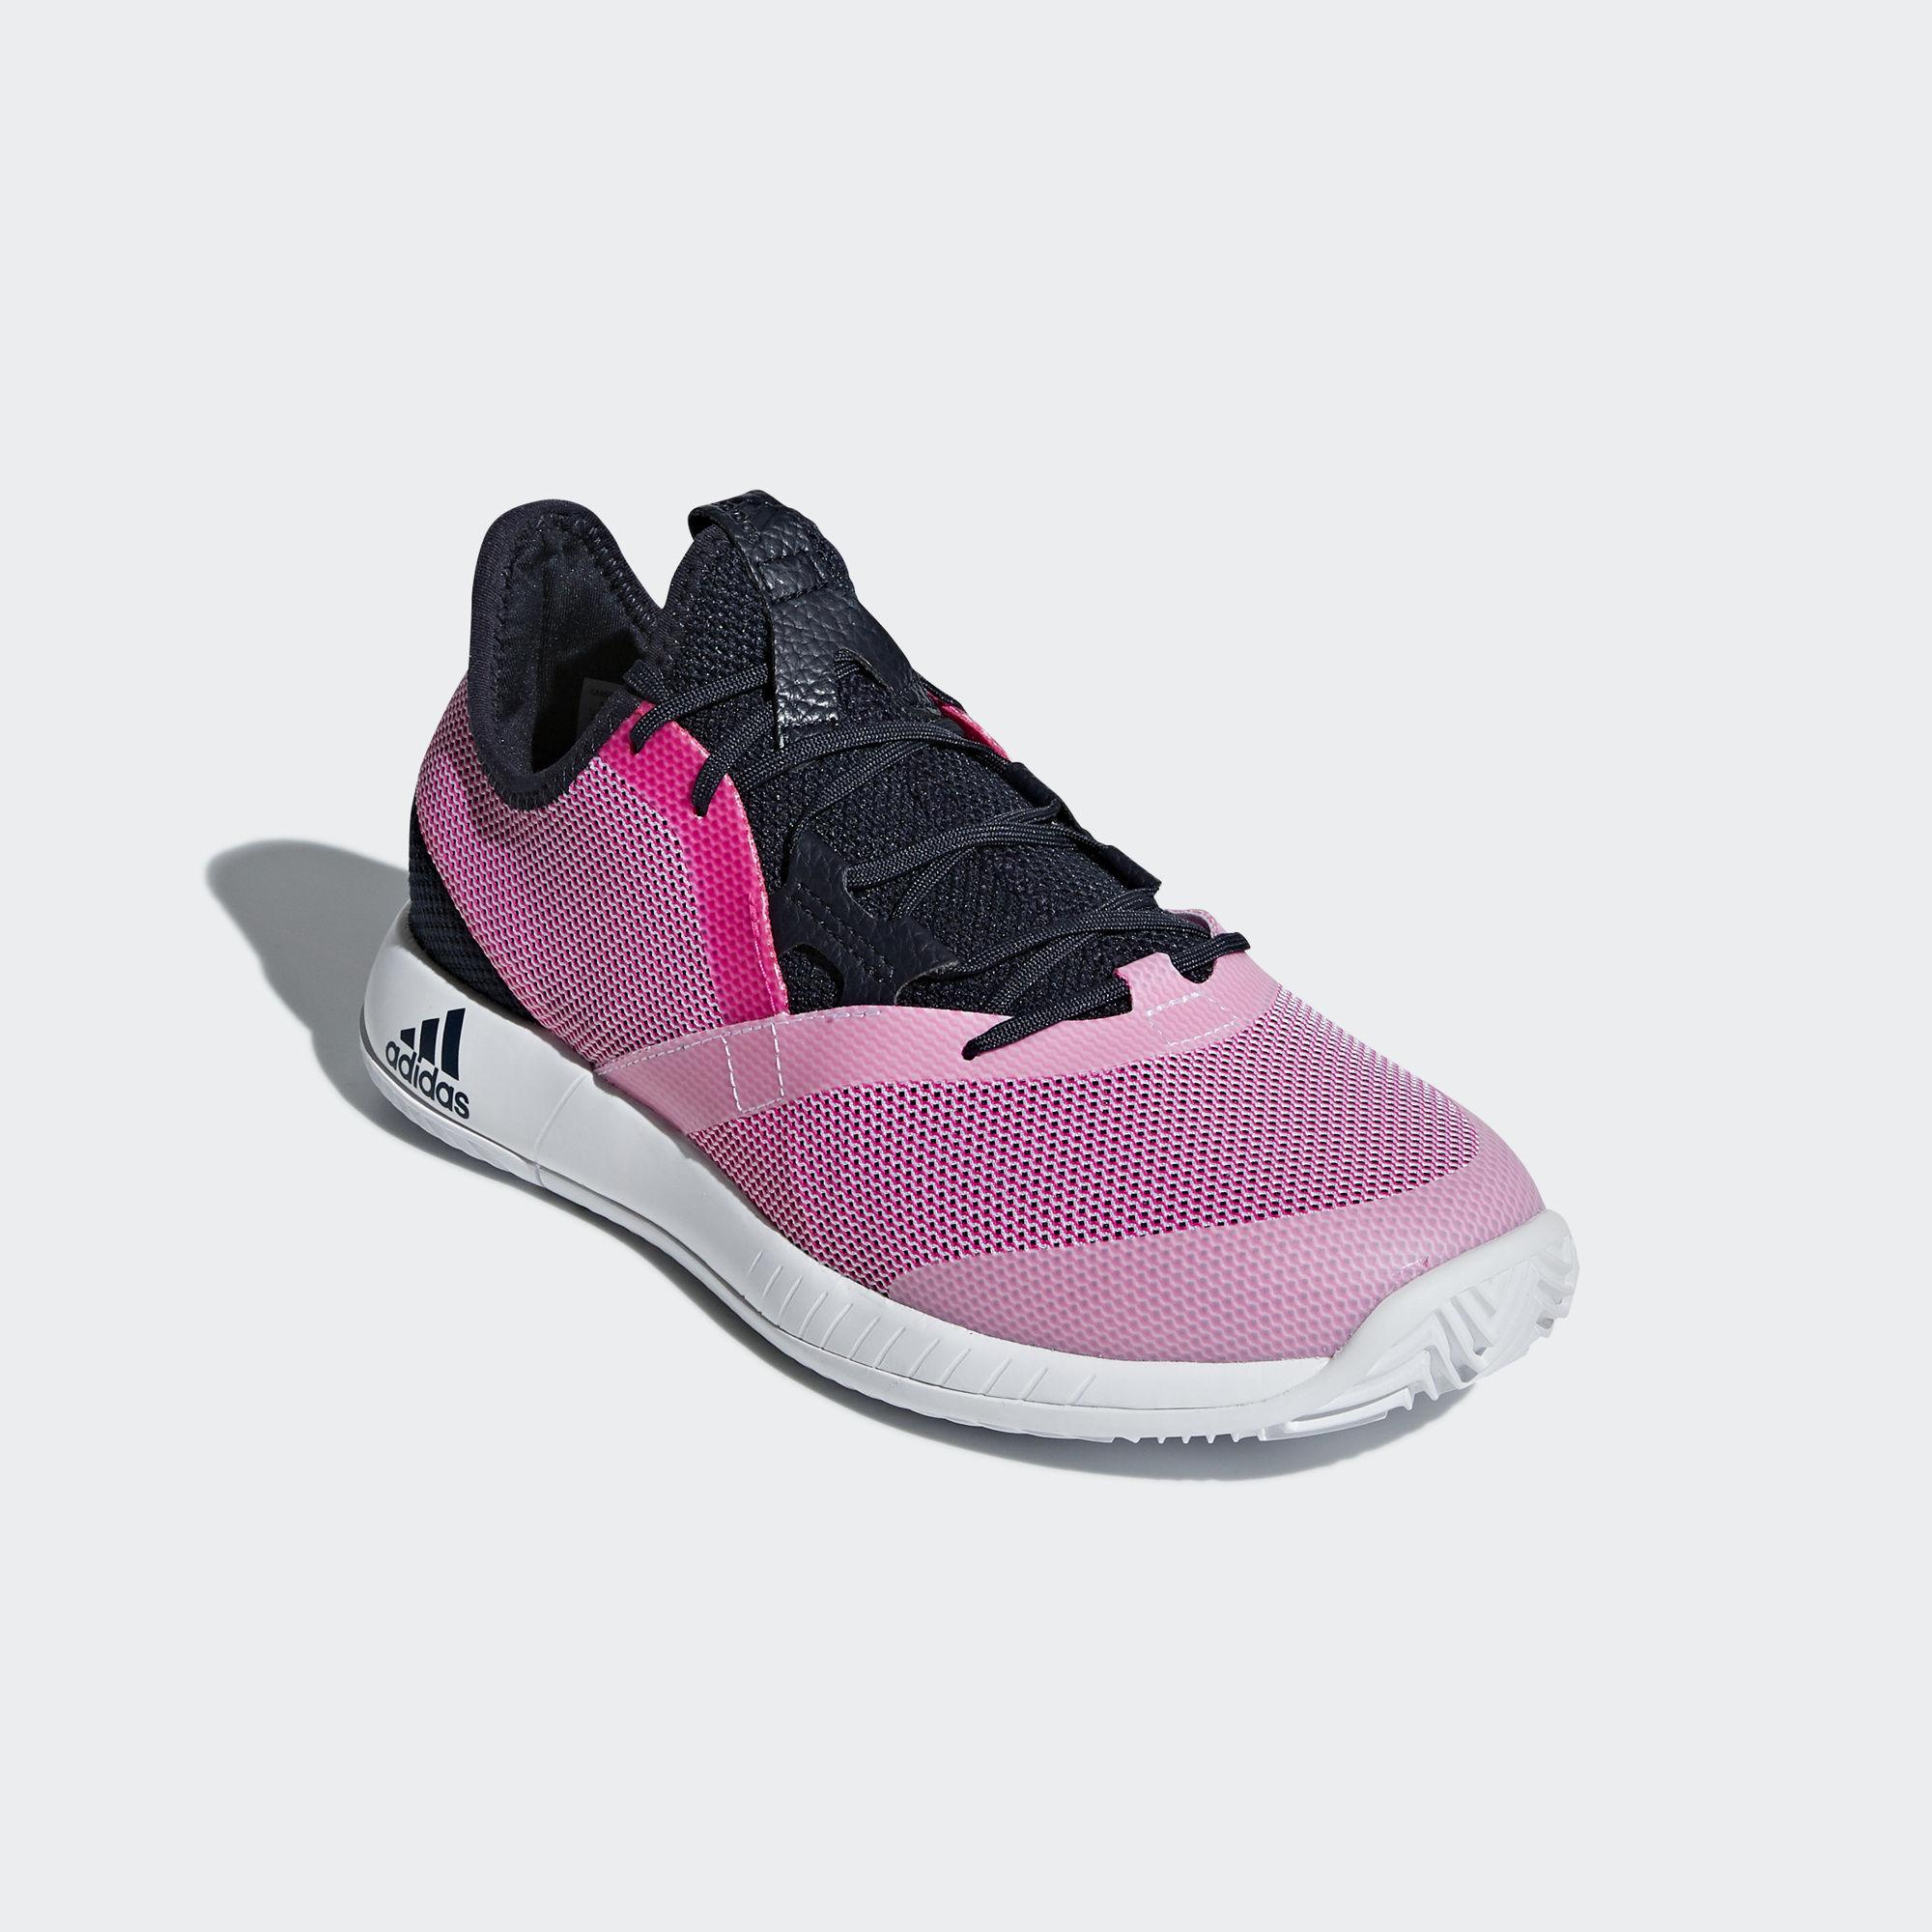 Adidas Womens Adizero Defiant Bounce Tennis Shoes - Legend Ink/Shock ...